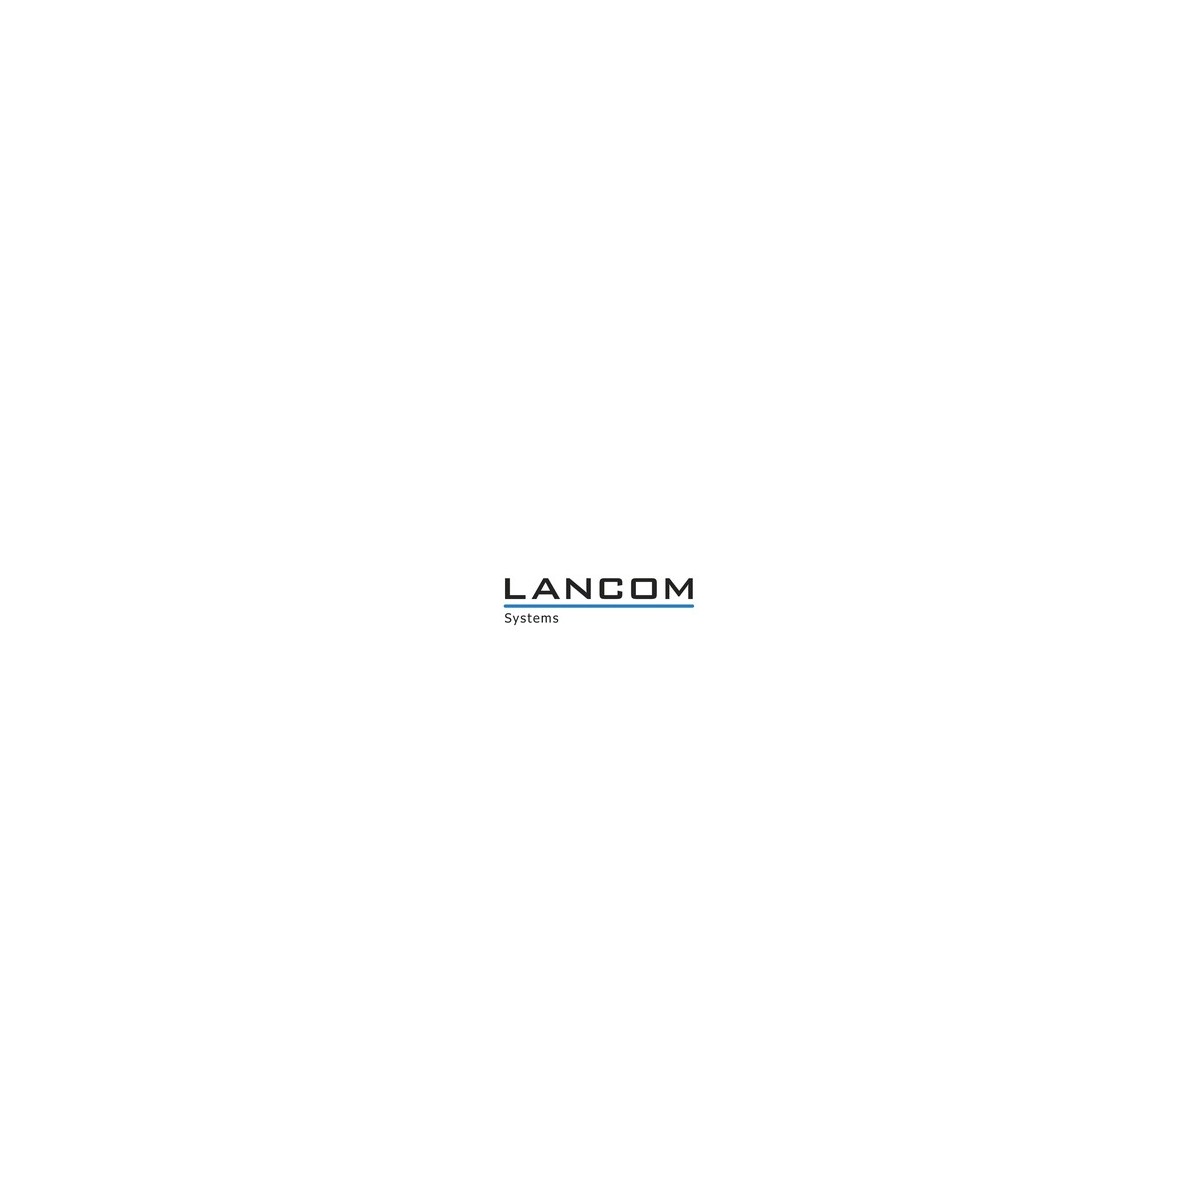 Lancom 55198 - 1 license(s) - Base - 1 year(s) - License